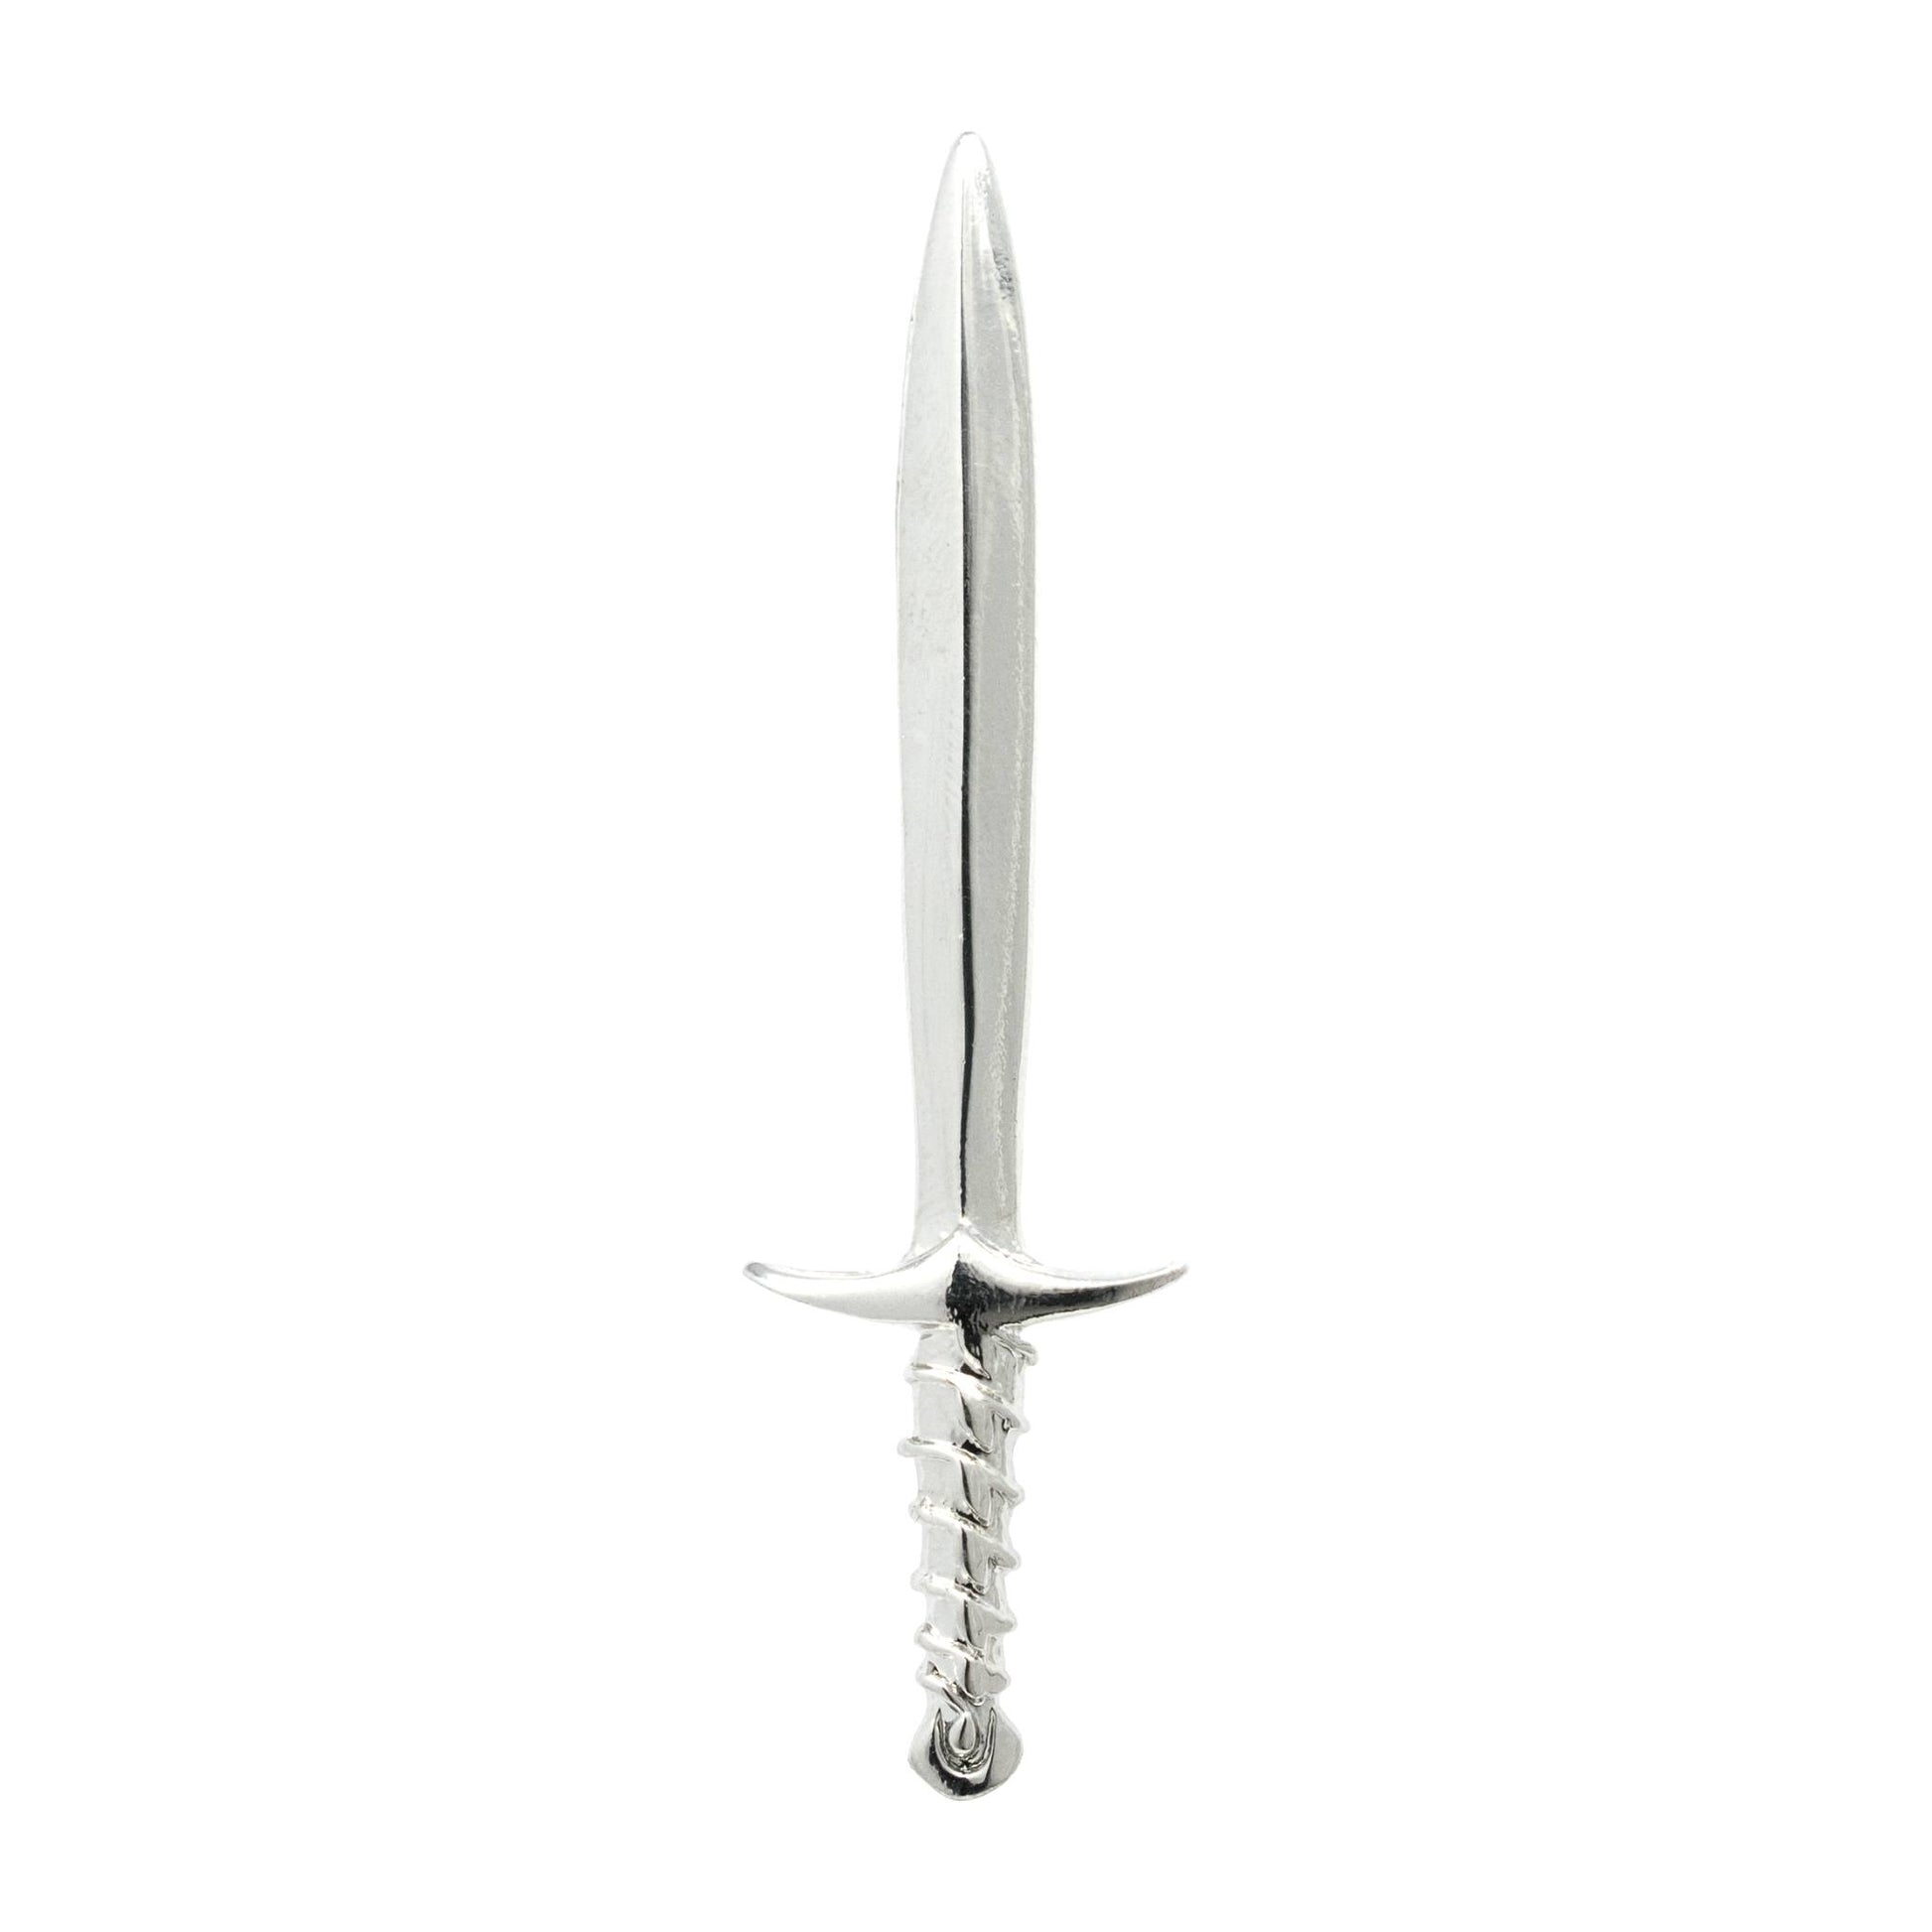 The Halfling's Blade (Hair Clip)